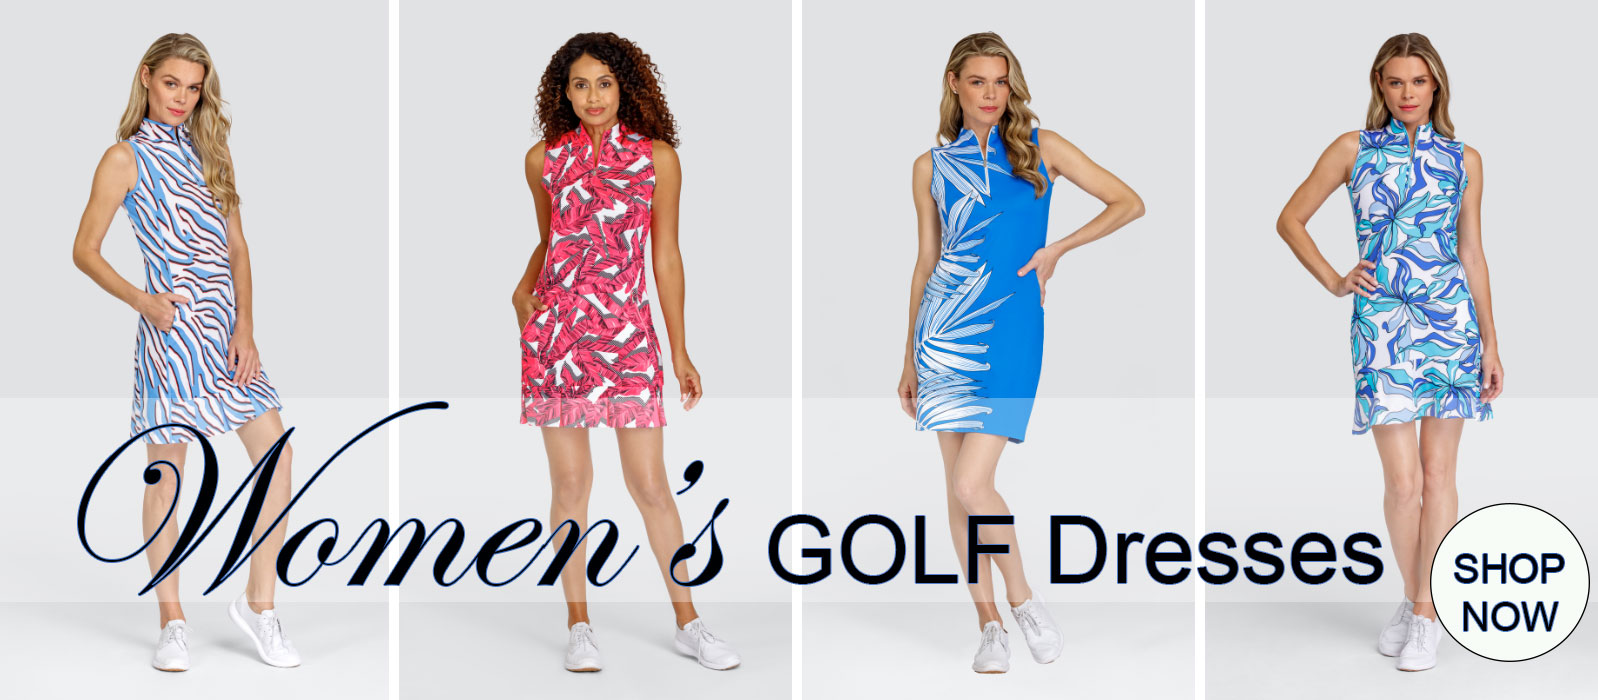 Ladies Golf Dresses, Golf Dresses for Women